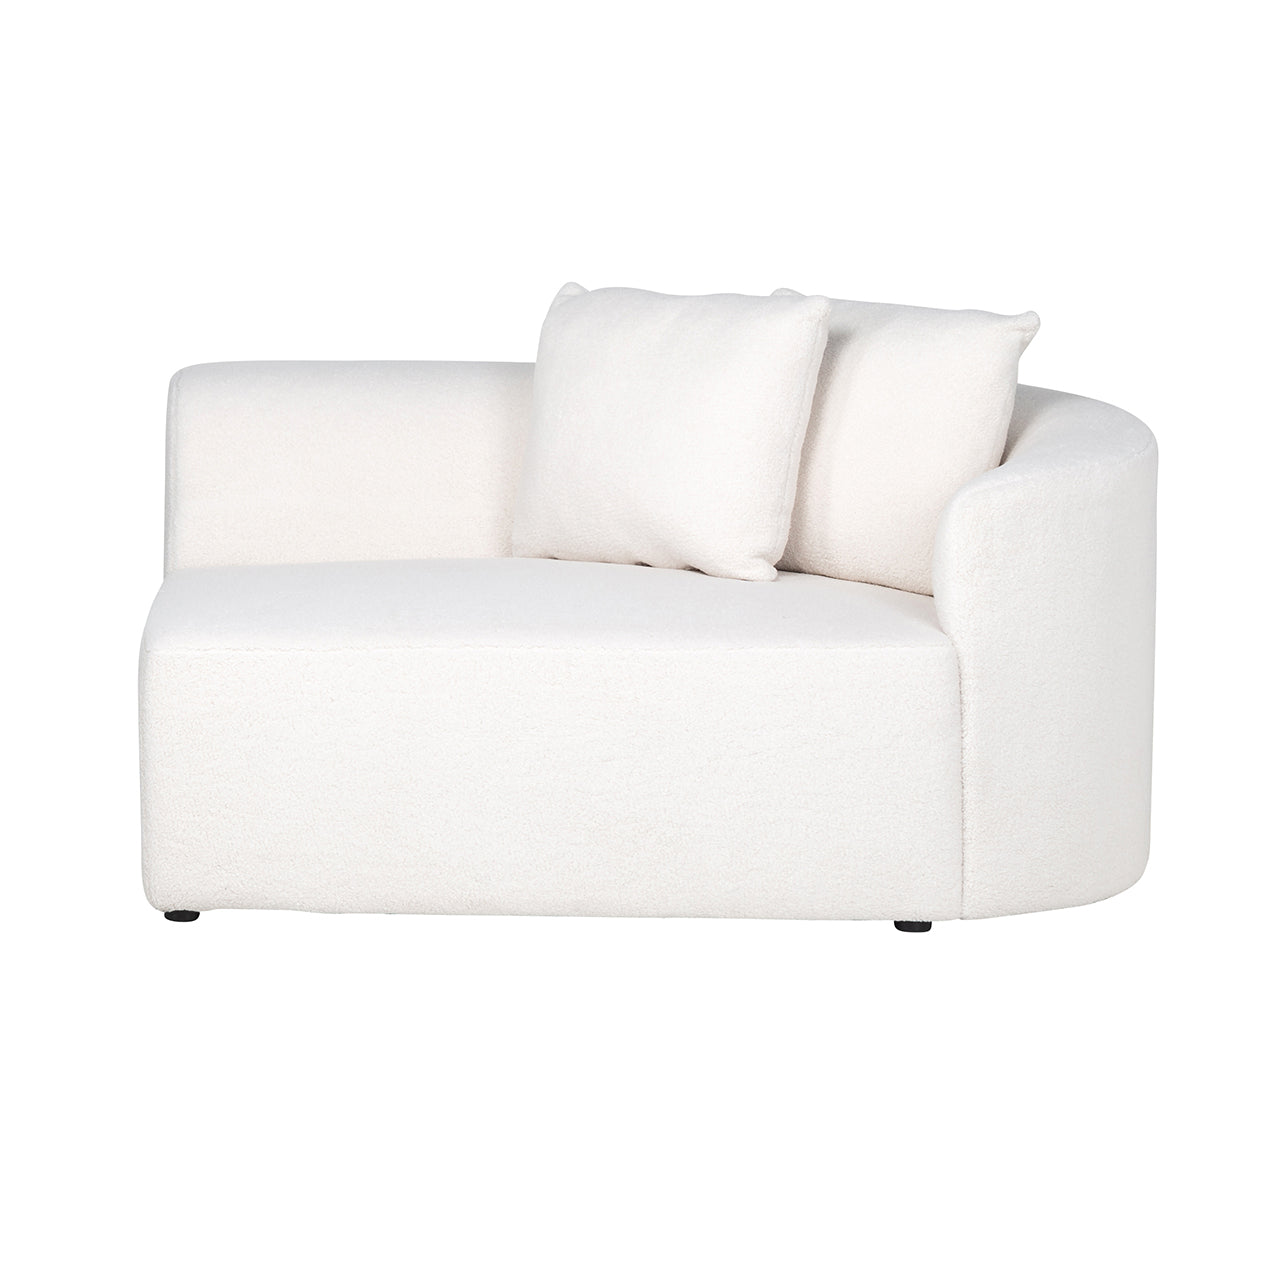 Richmond Interiors Couch Grayson Armlehne Rechts White Furry 88 cm x 140 cm x 71 cm BadlyBitten